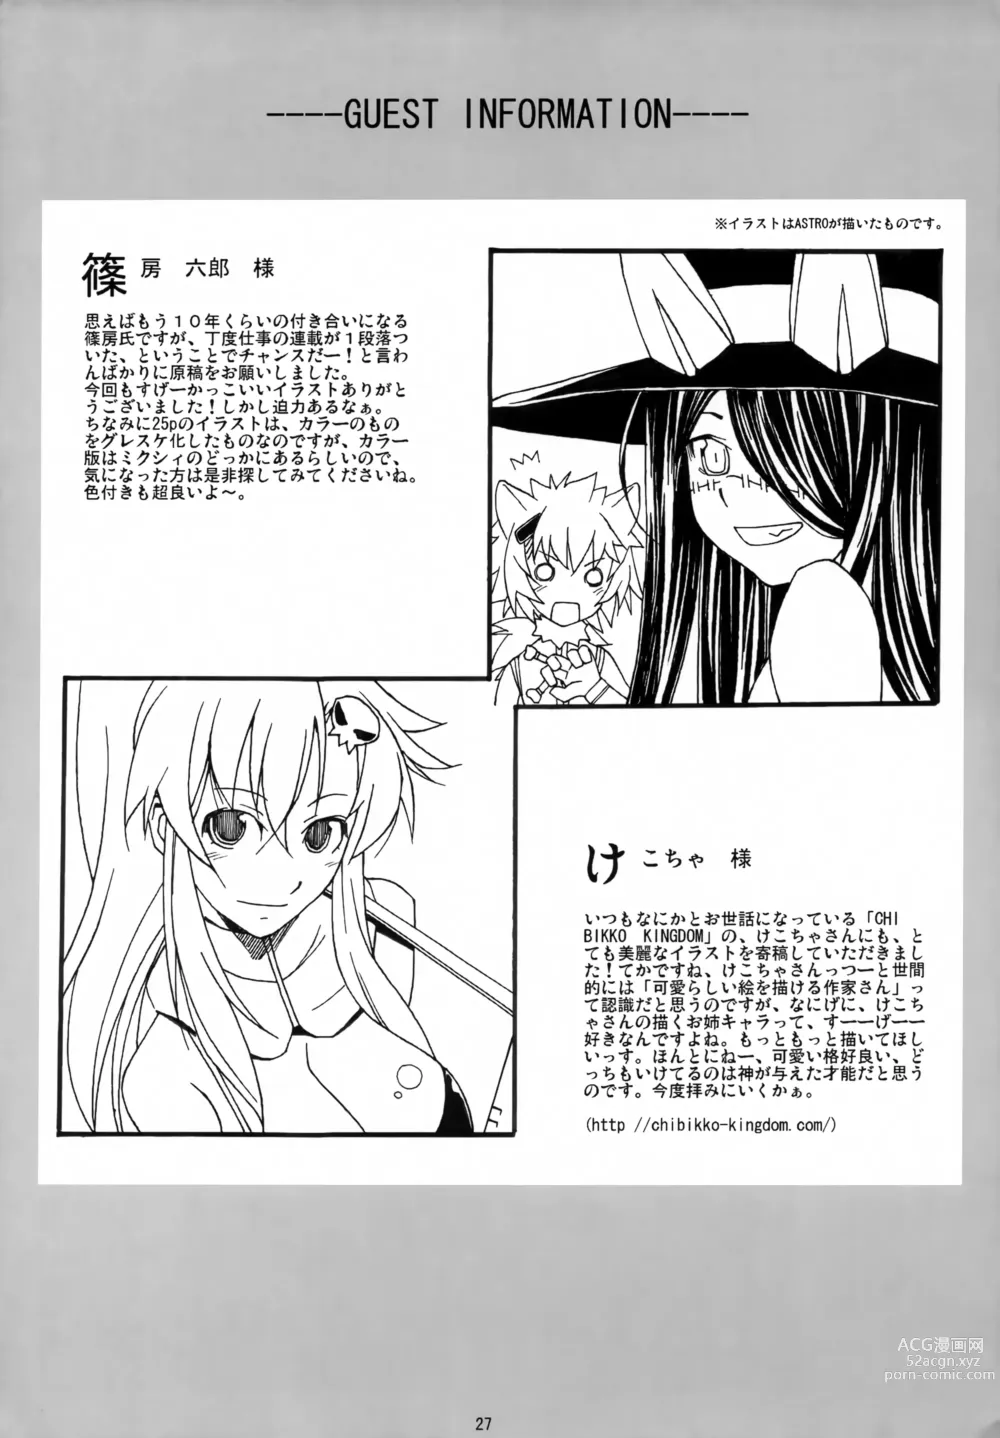 Page 28 of doujinshi LIMIT ZERO